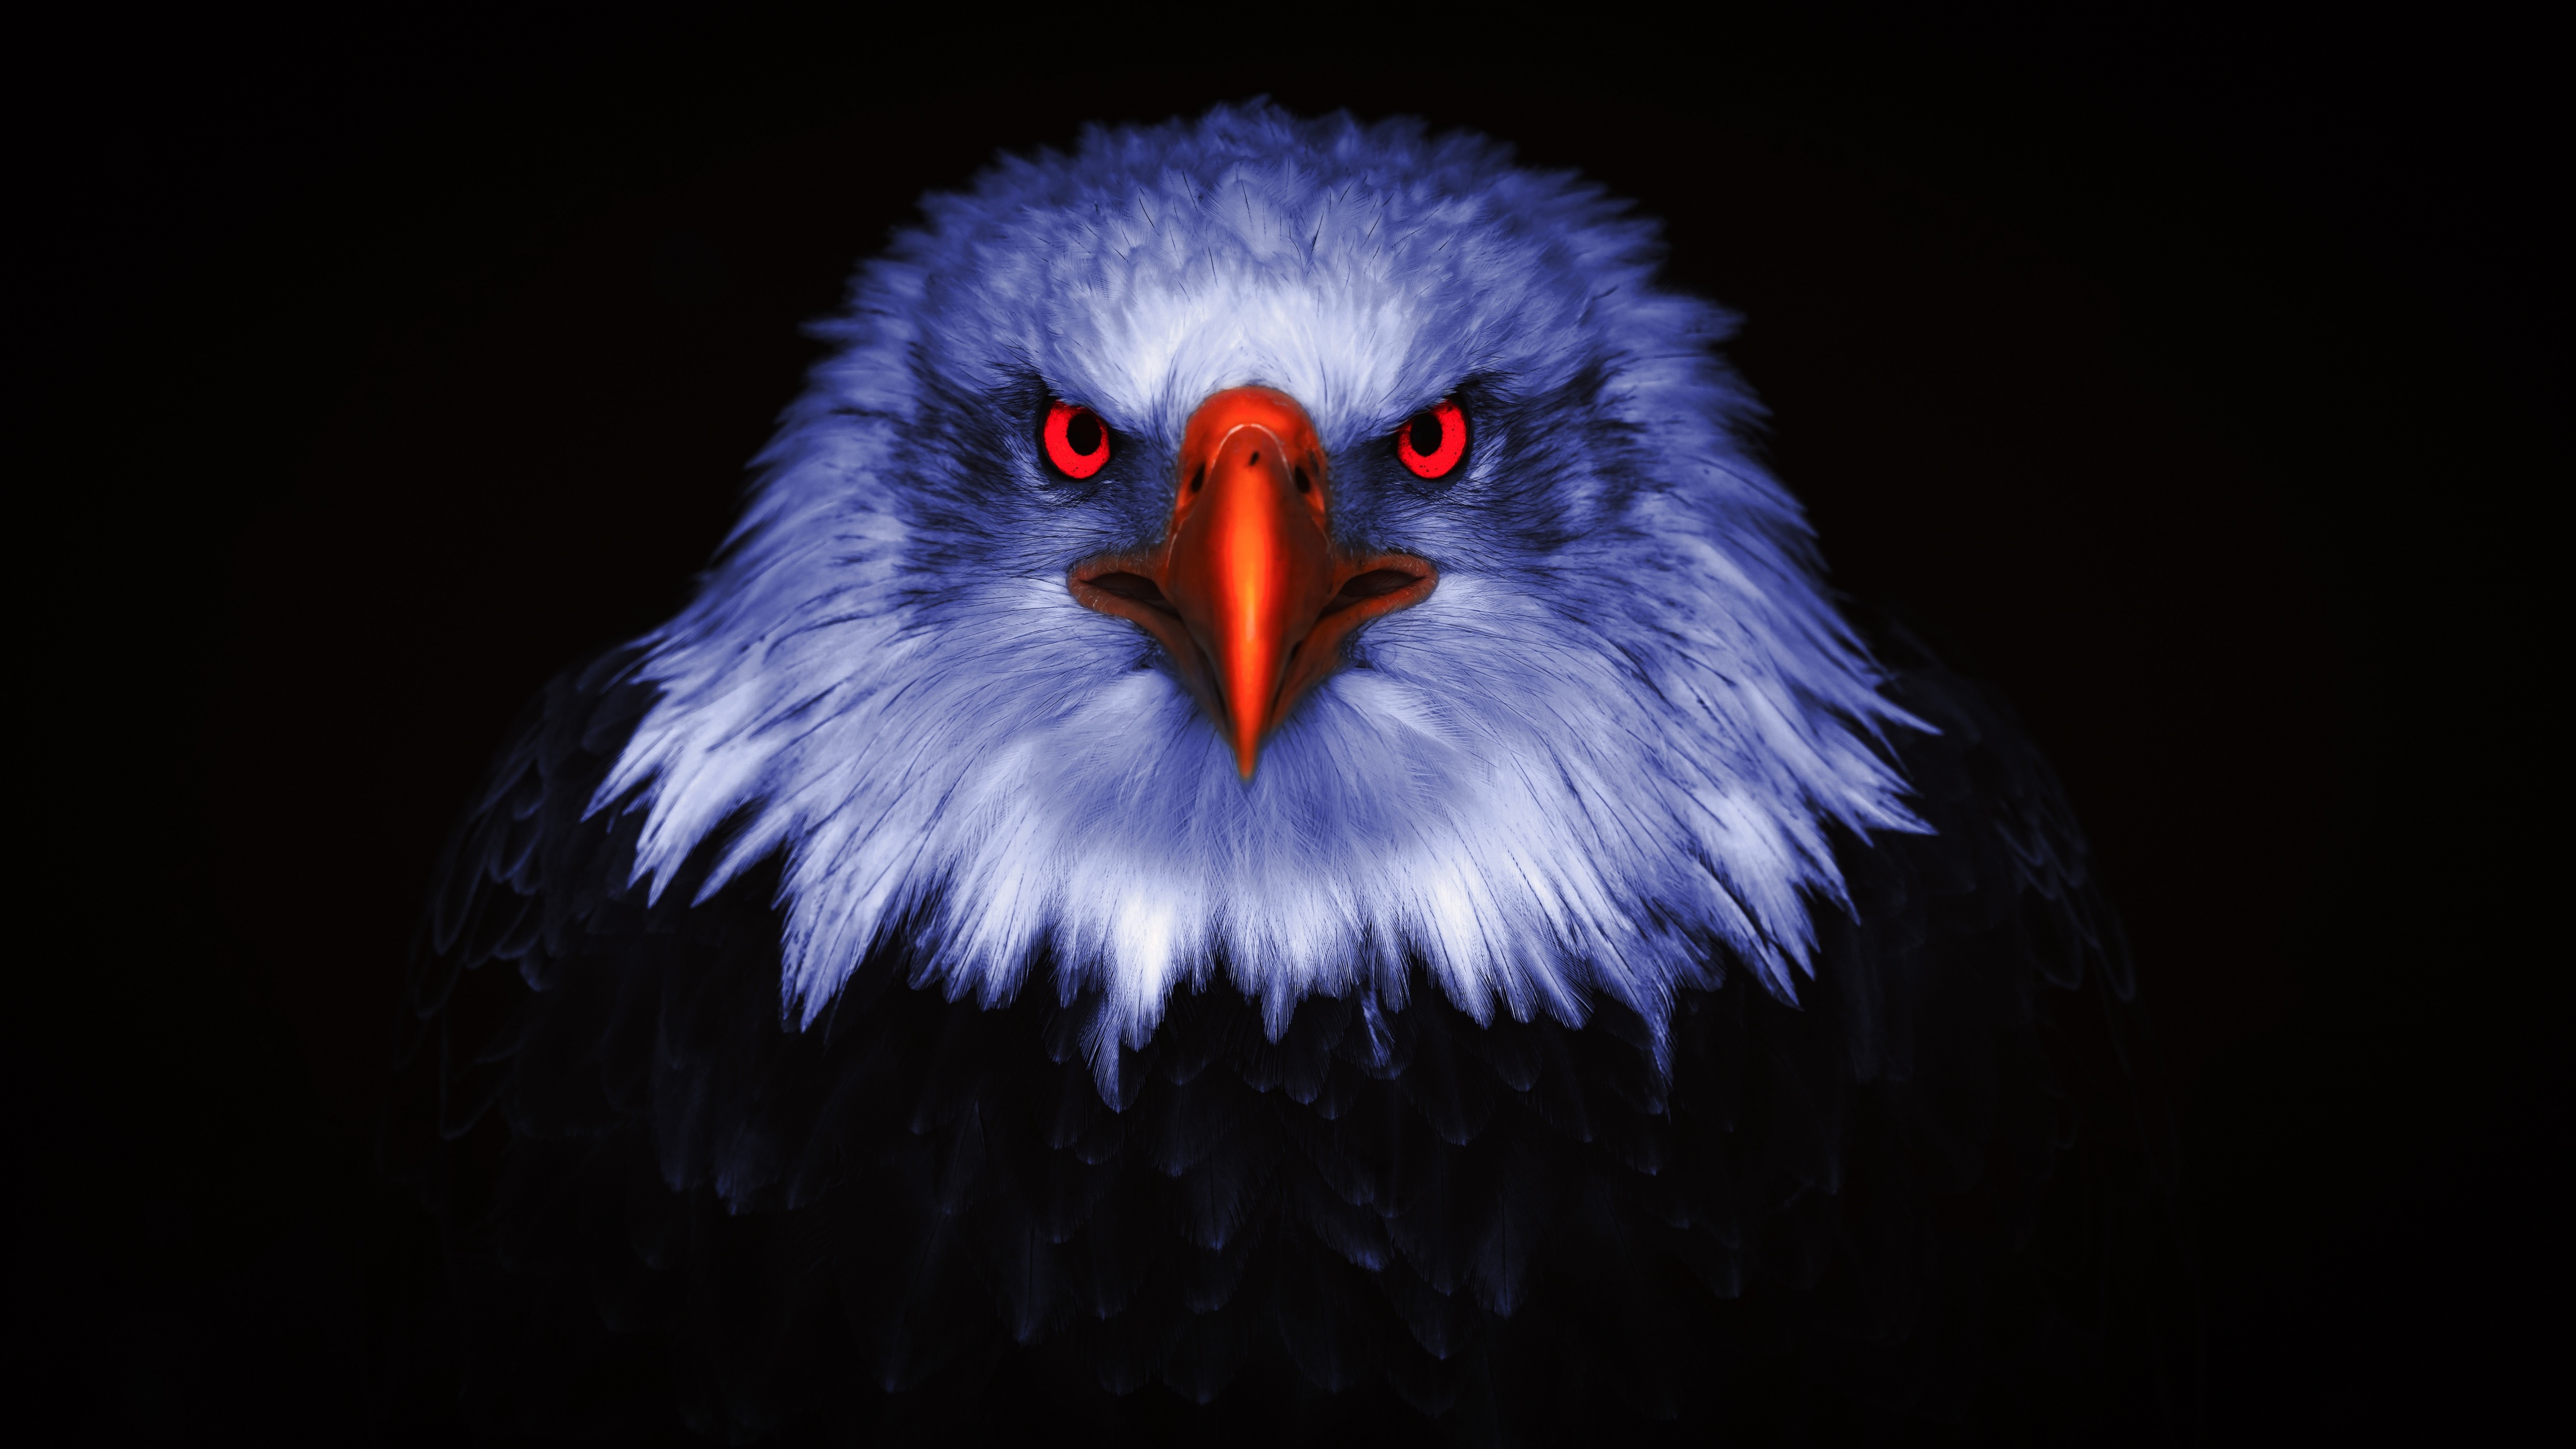 https://4kwallpapers.com/images/wallpapers/eagle-bird-of-prey-raptors-red-eyes-black-background-5k-8k-3840x2160-4424.jpg